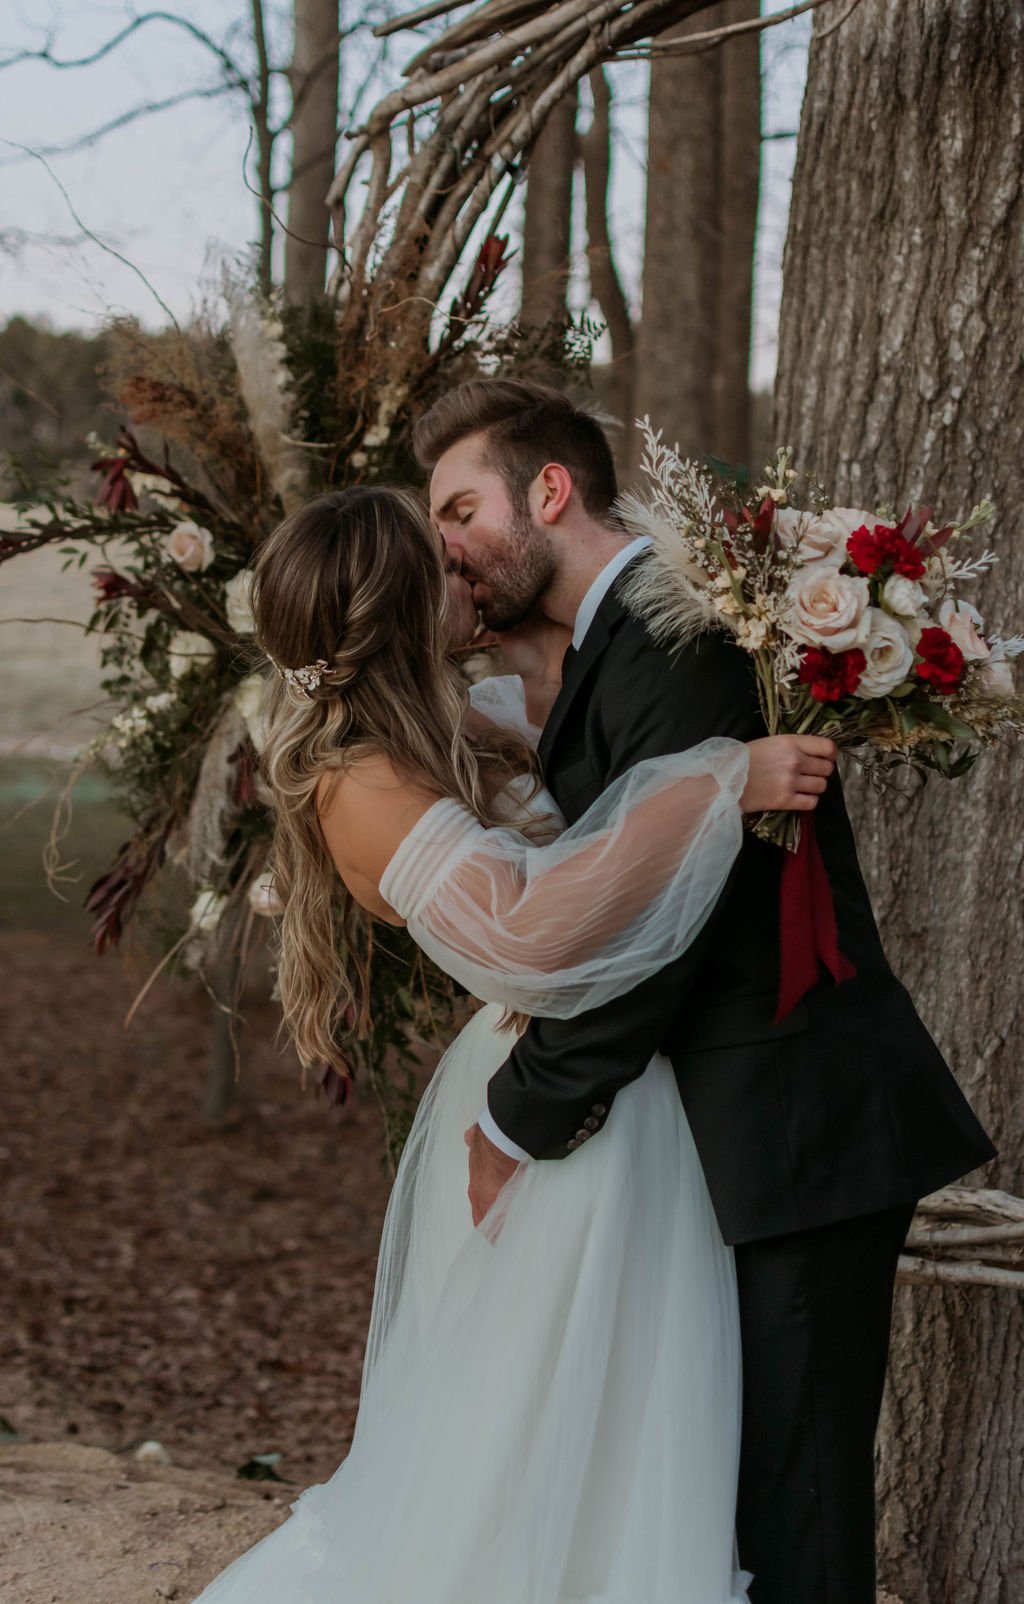 Alean-Leena-Armeria-Wedding-Dress-The-Meadows-Raleigh-17.jpg